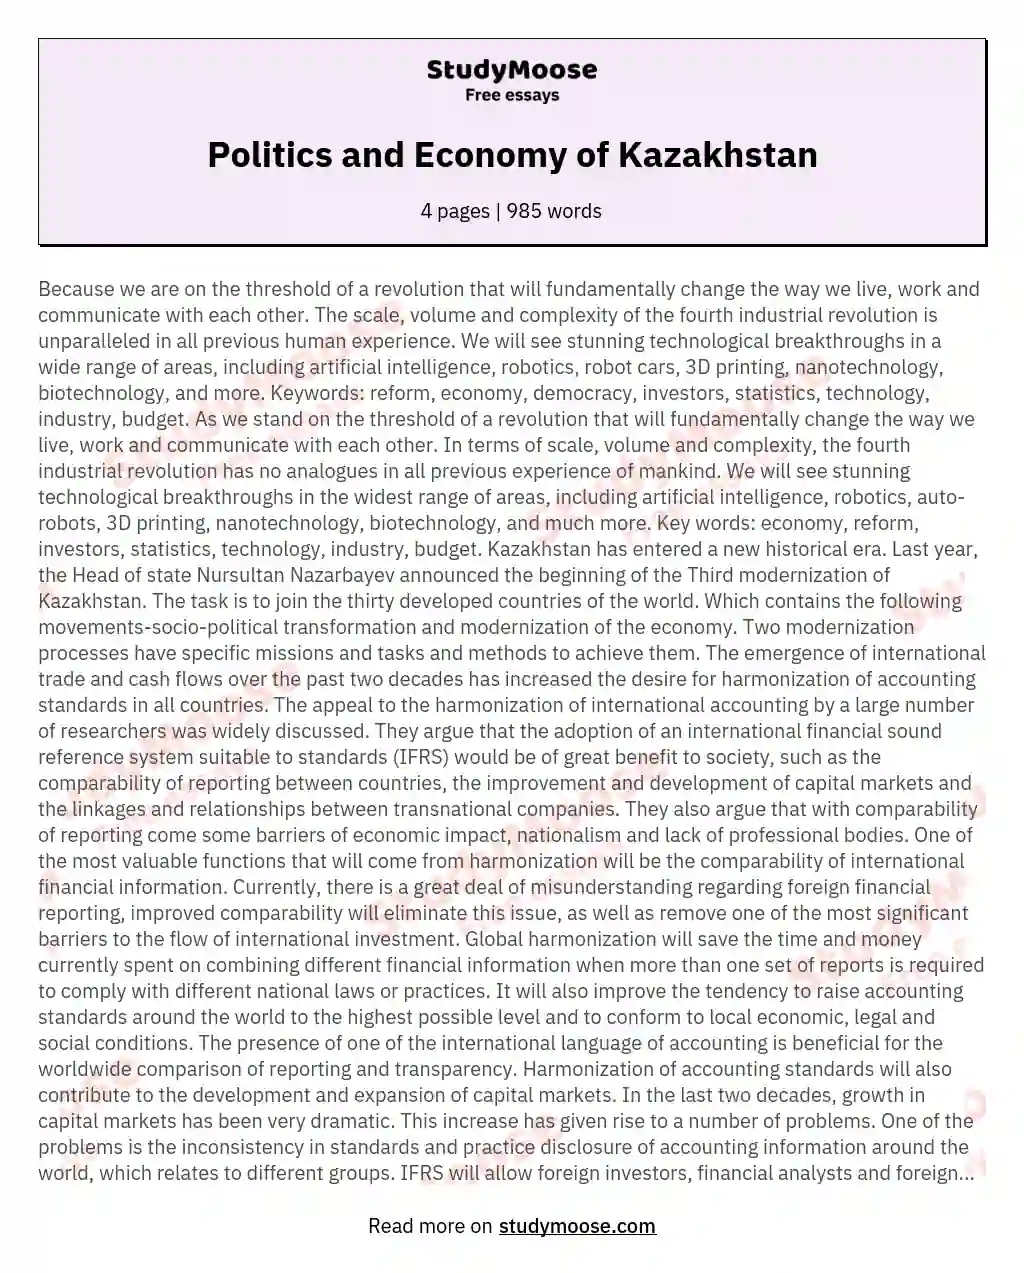 republic of kazakhstan essay